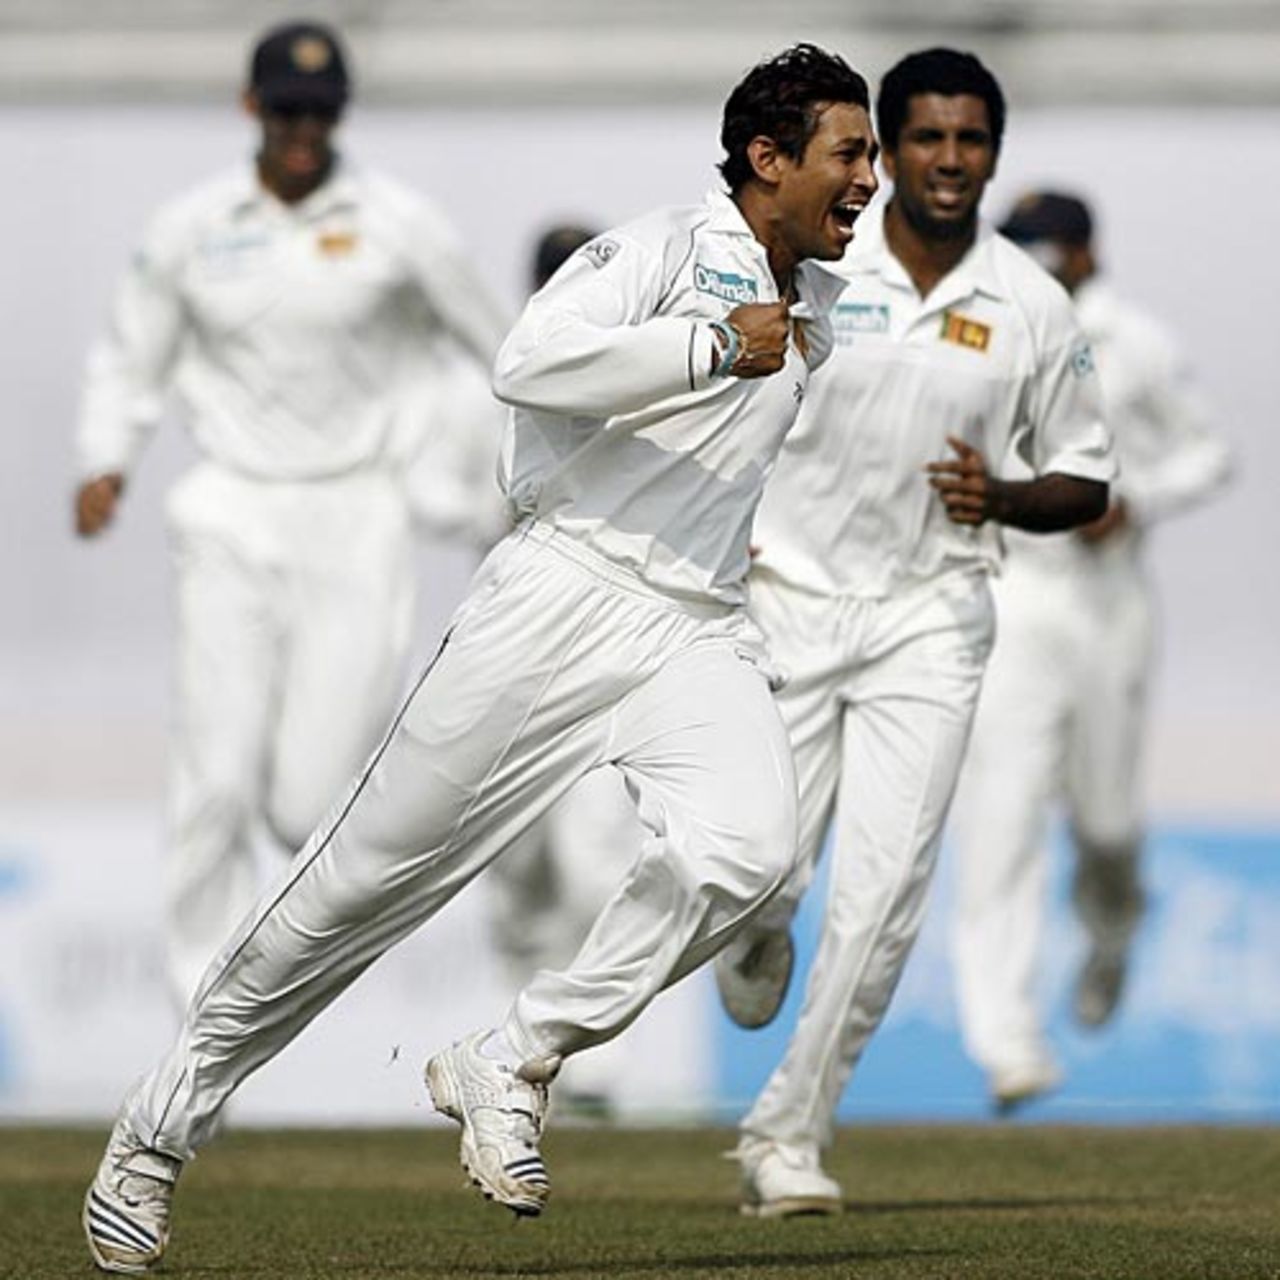 Tillakaratne Dilshan is delighted after running out Imrul Kayes, Bangladesh v Sri Lanka, 1st Test, Dhaka, 4th day, December 30, 2008